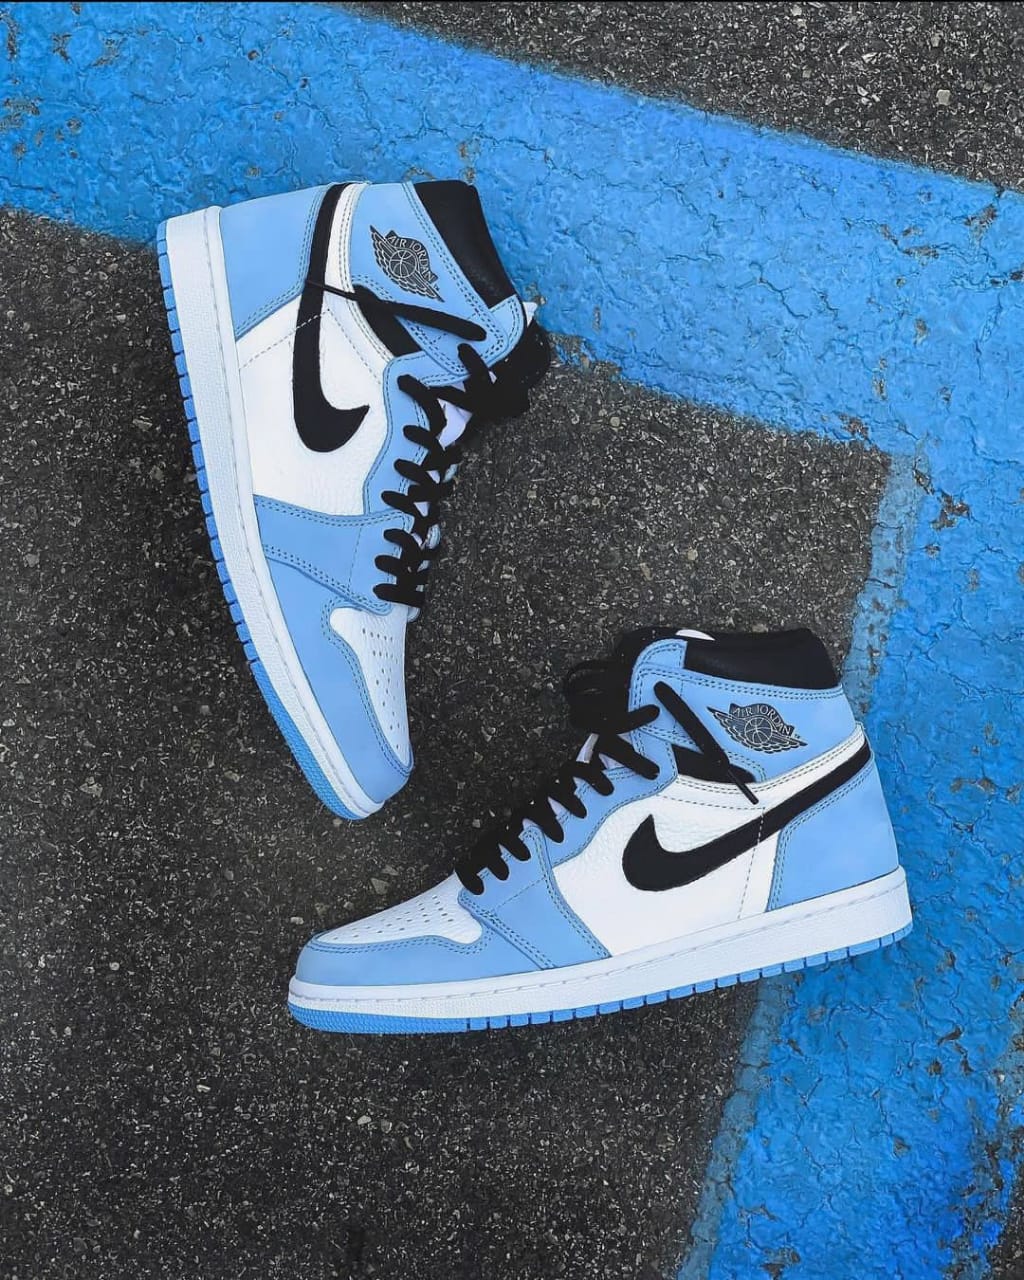 Blue Jordans Wallpapers